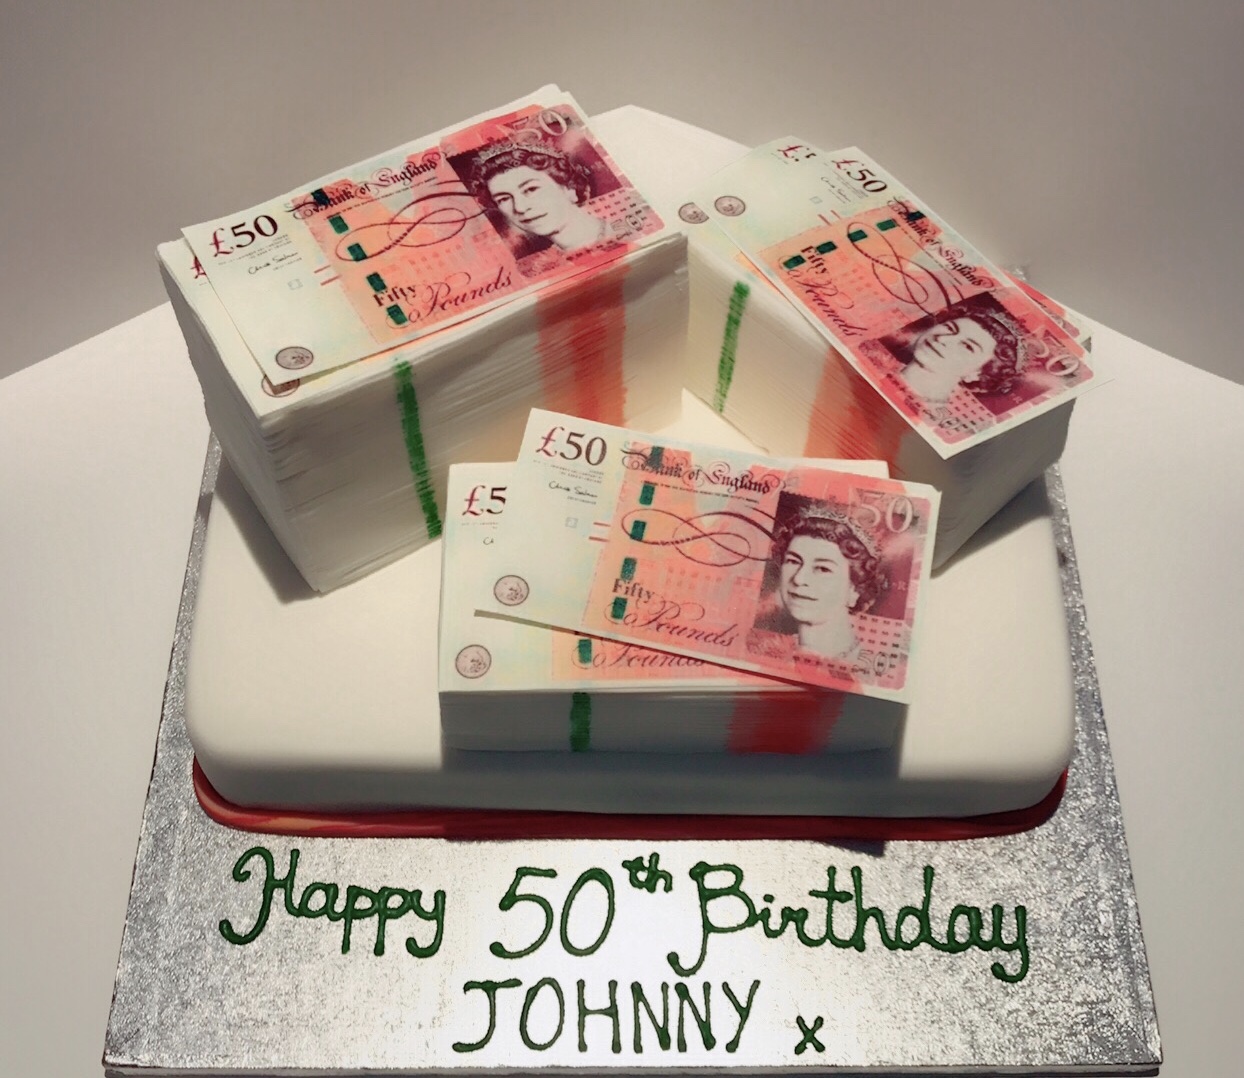 The Fifty Pound Cake - Torte Cake Art